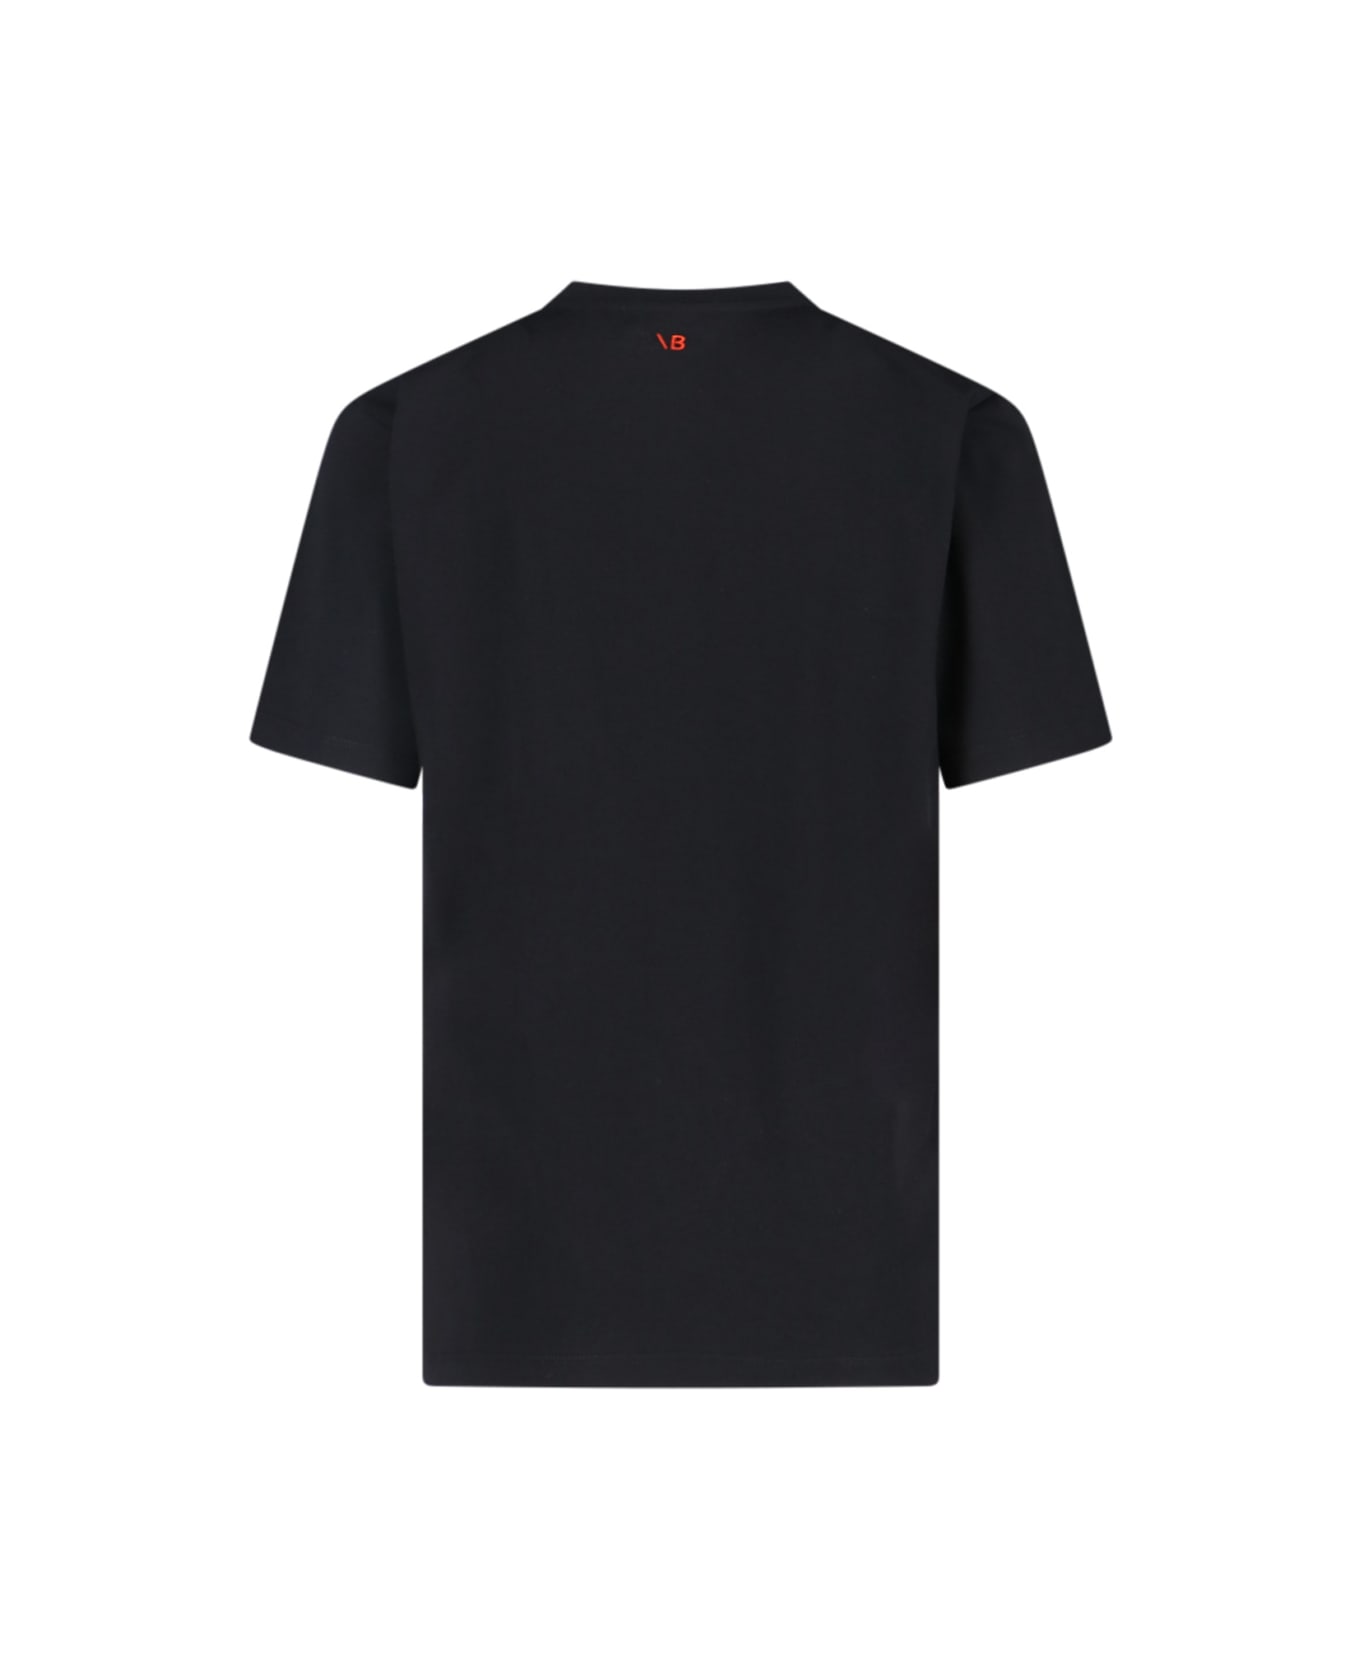 Victoria Beckham 'slogan' T-shirt - Black  